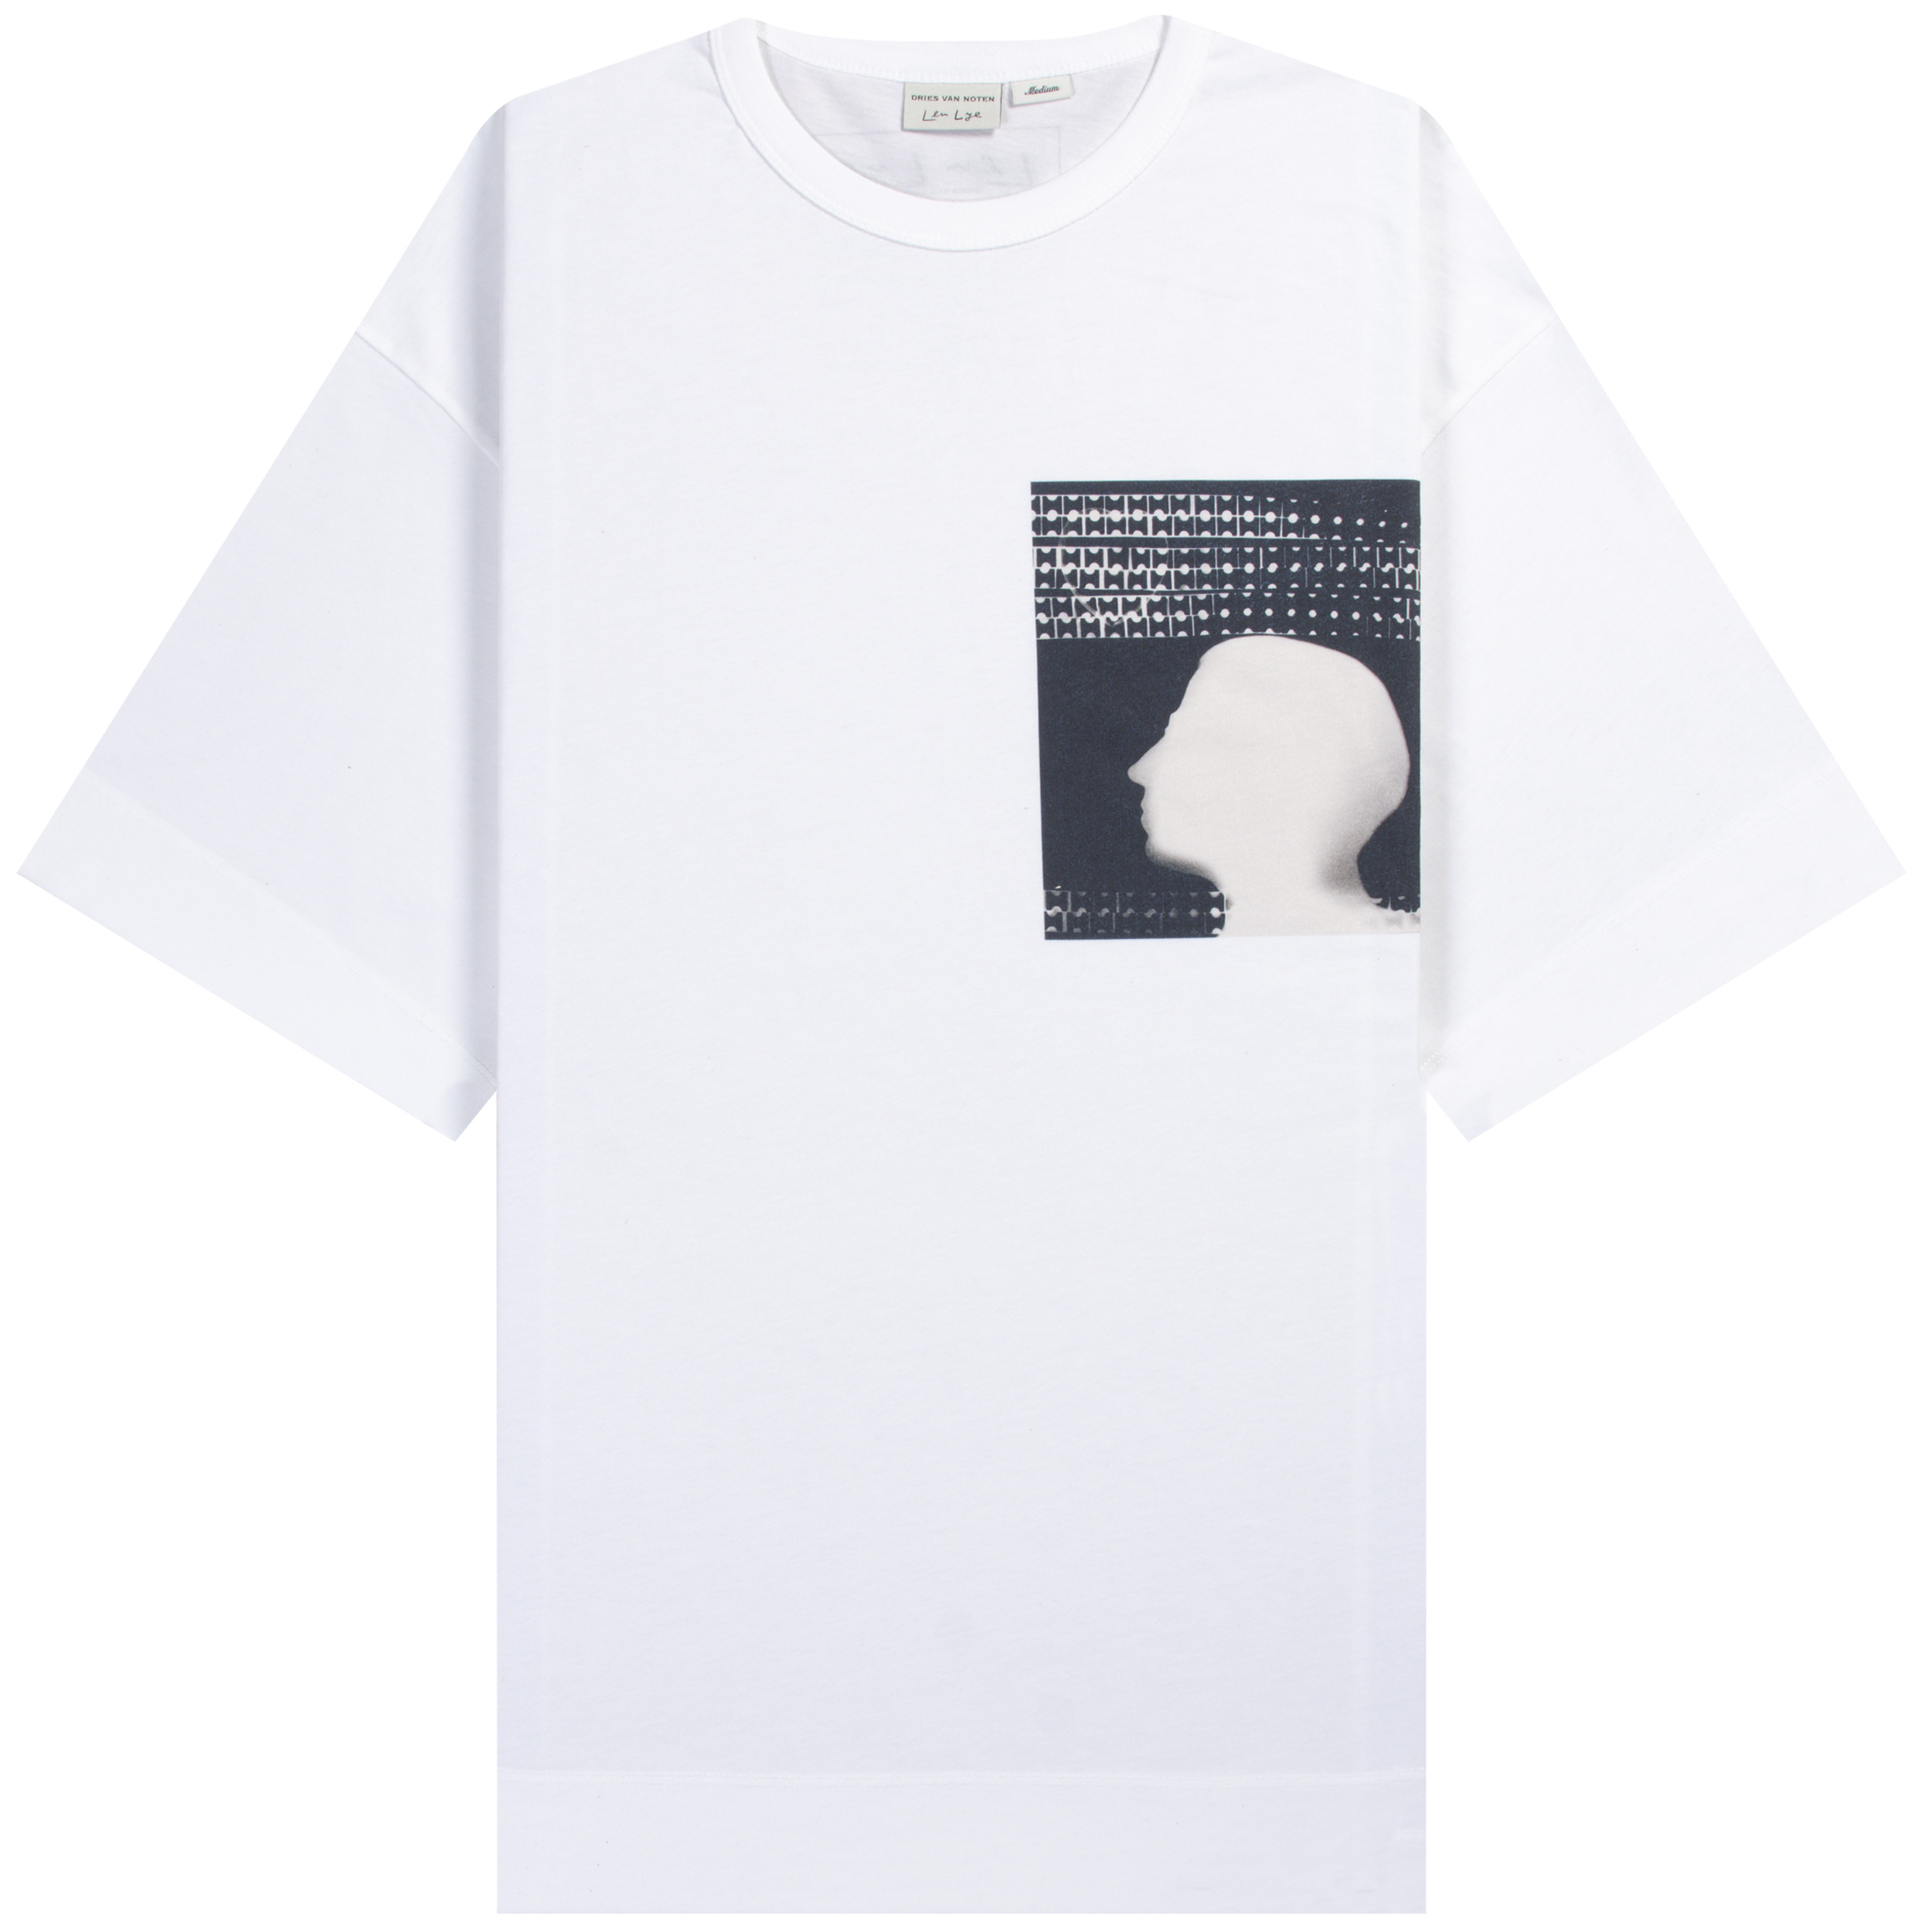 Dries Van Noten Len Lye ’Tony Moreno’ Printed Silhouette T-Shirt White